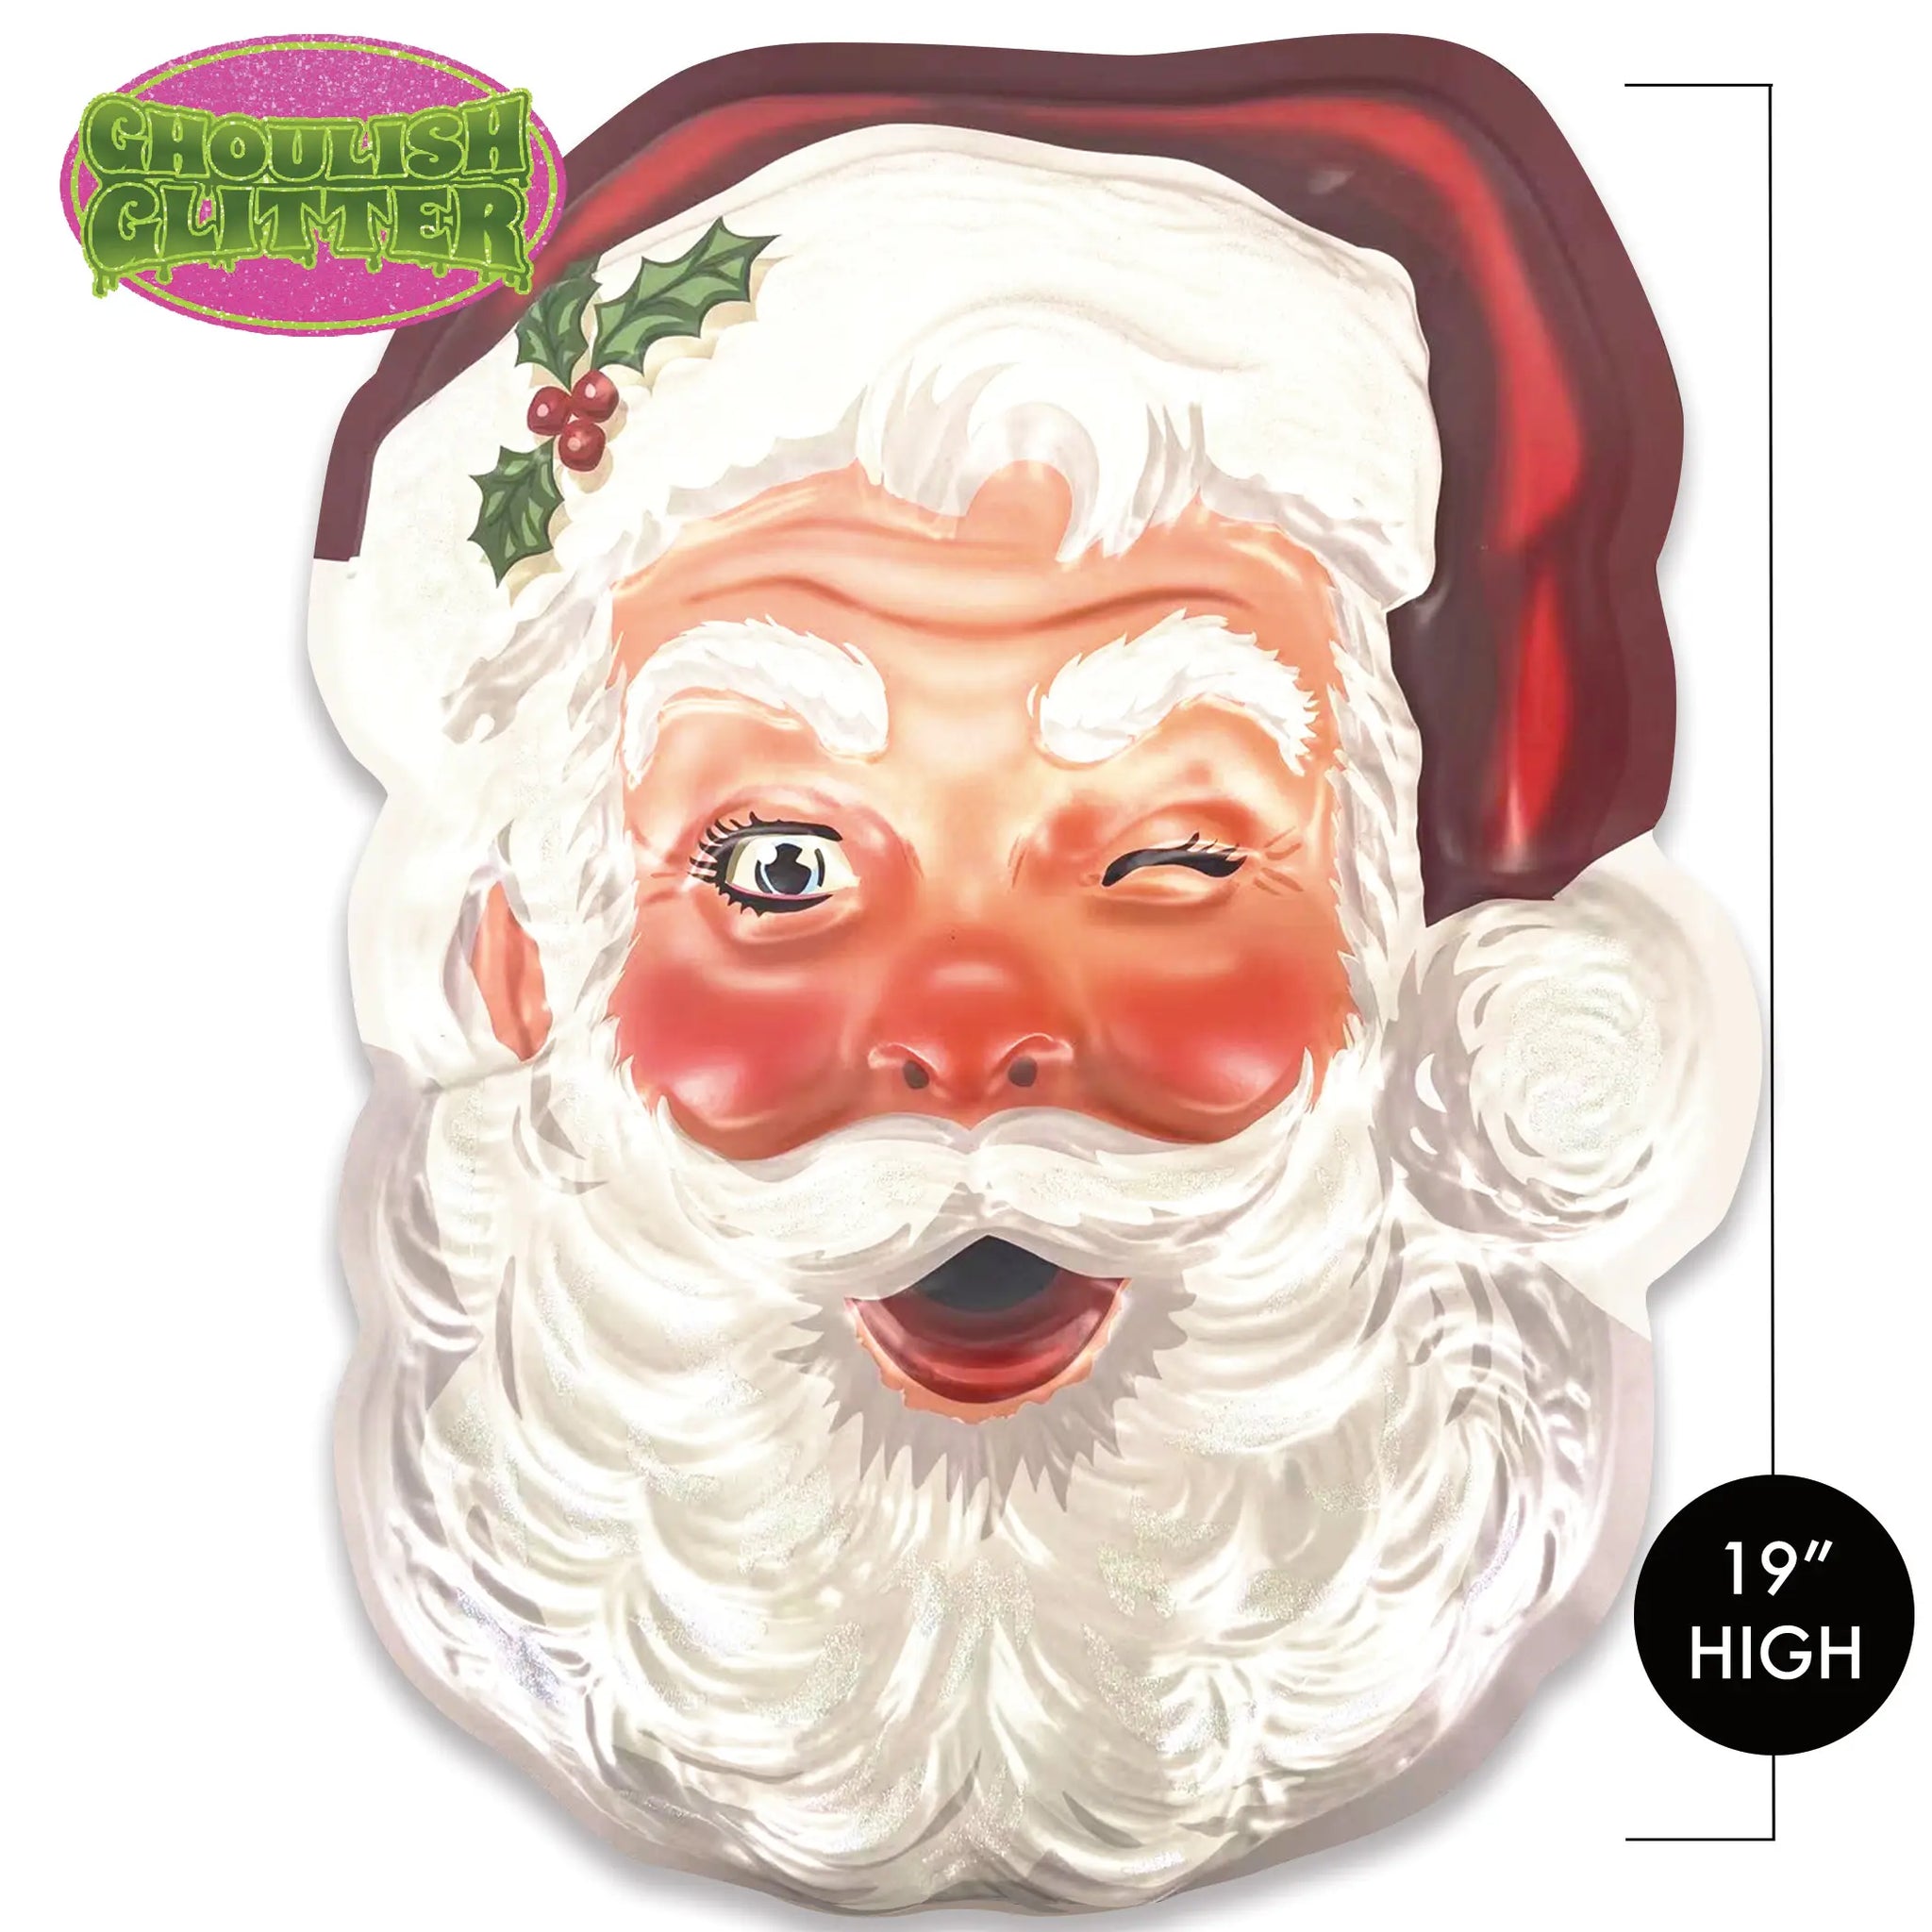 Hollydaze winking expression "Classic Santa" face vacu-form plastic wall decor